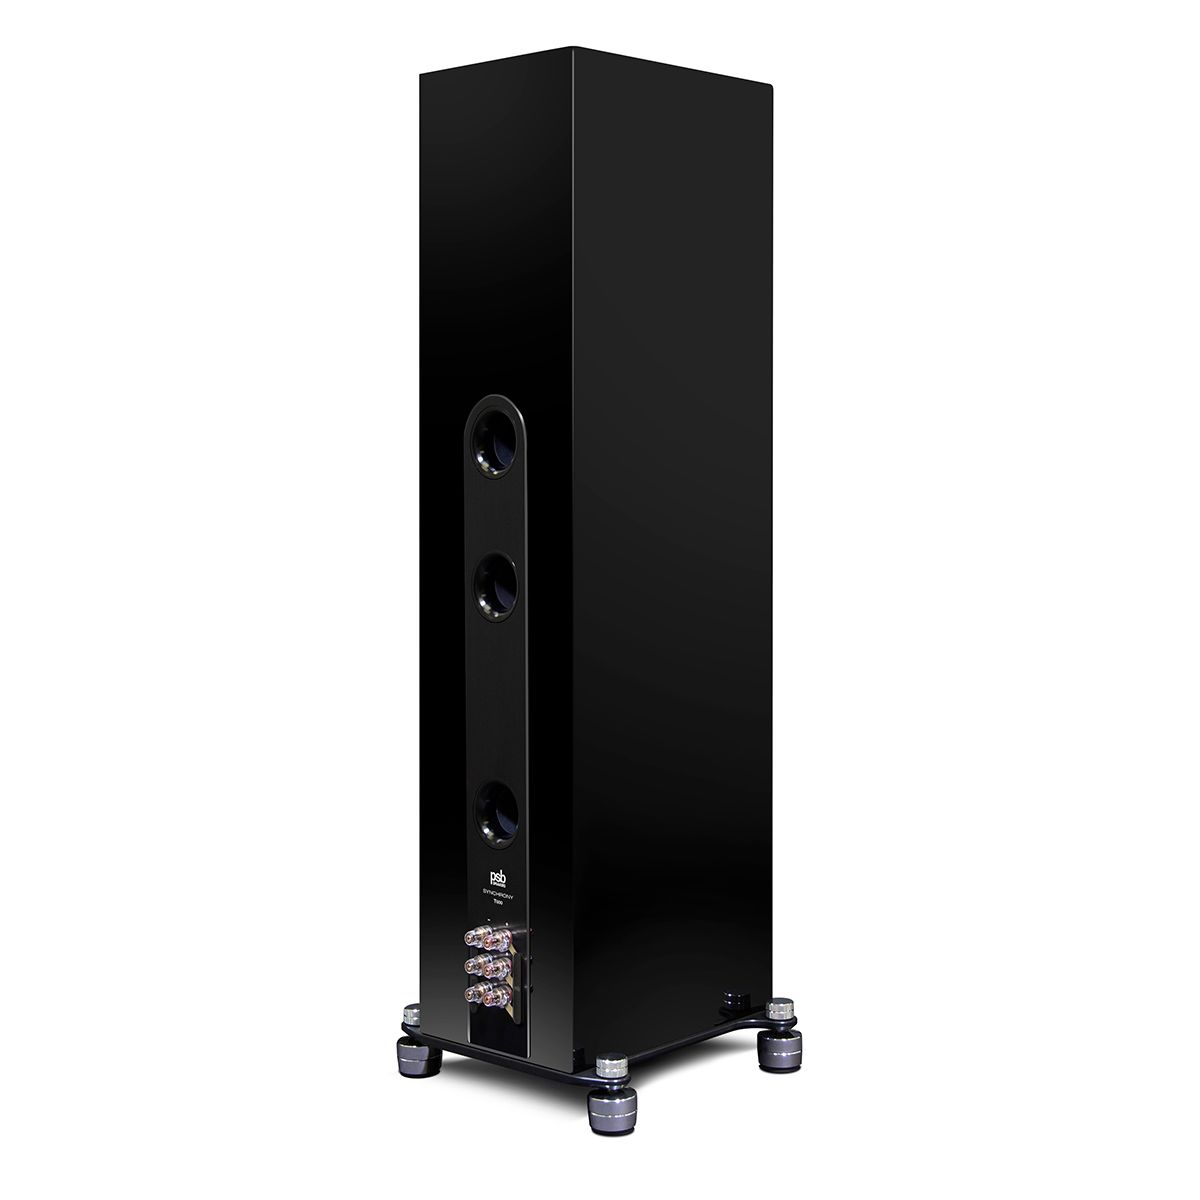 PSB Synchrony T600 Premium Tower Speaker - Black - single angled rear view